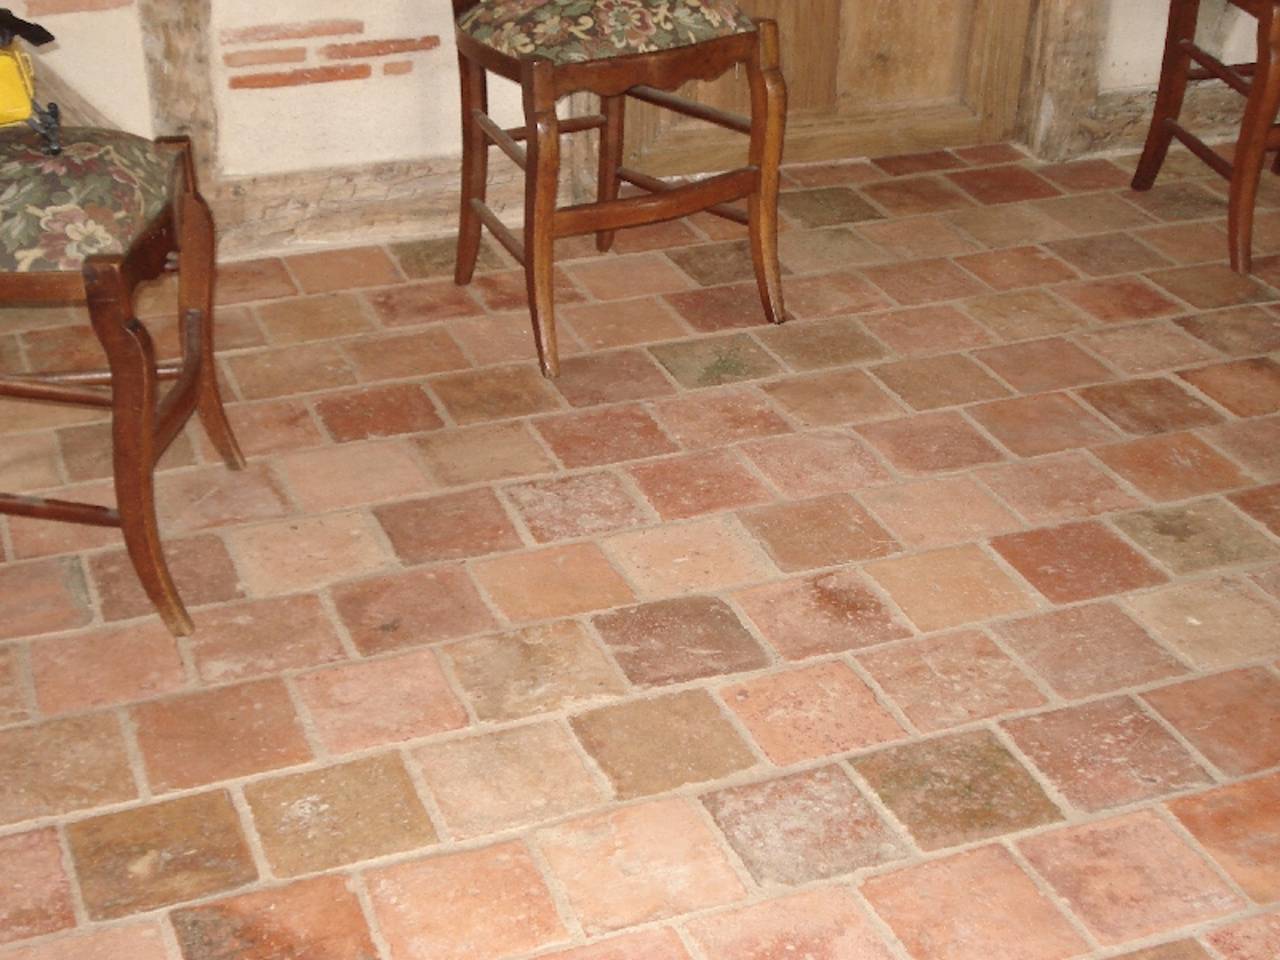 19th century flooring